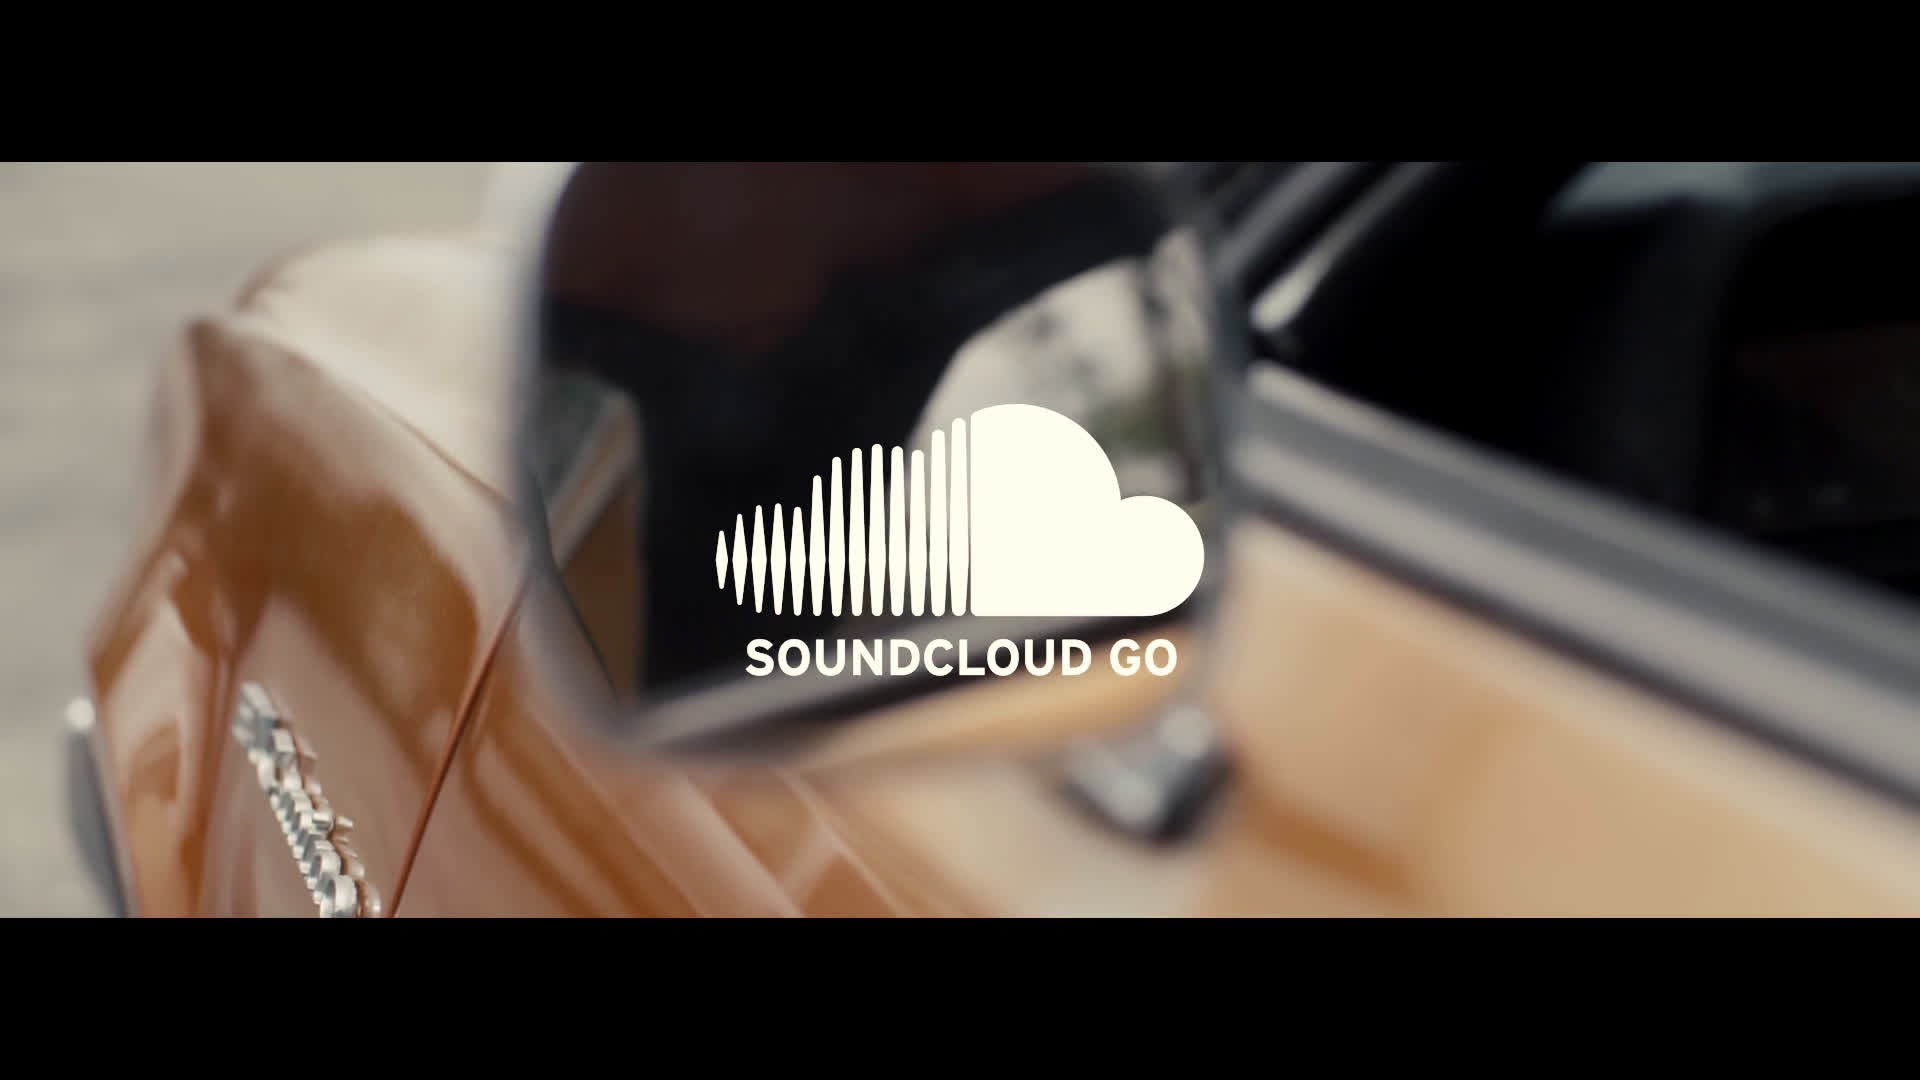 SoundCloud Go “Anywhere” Austin Activation